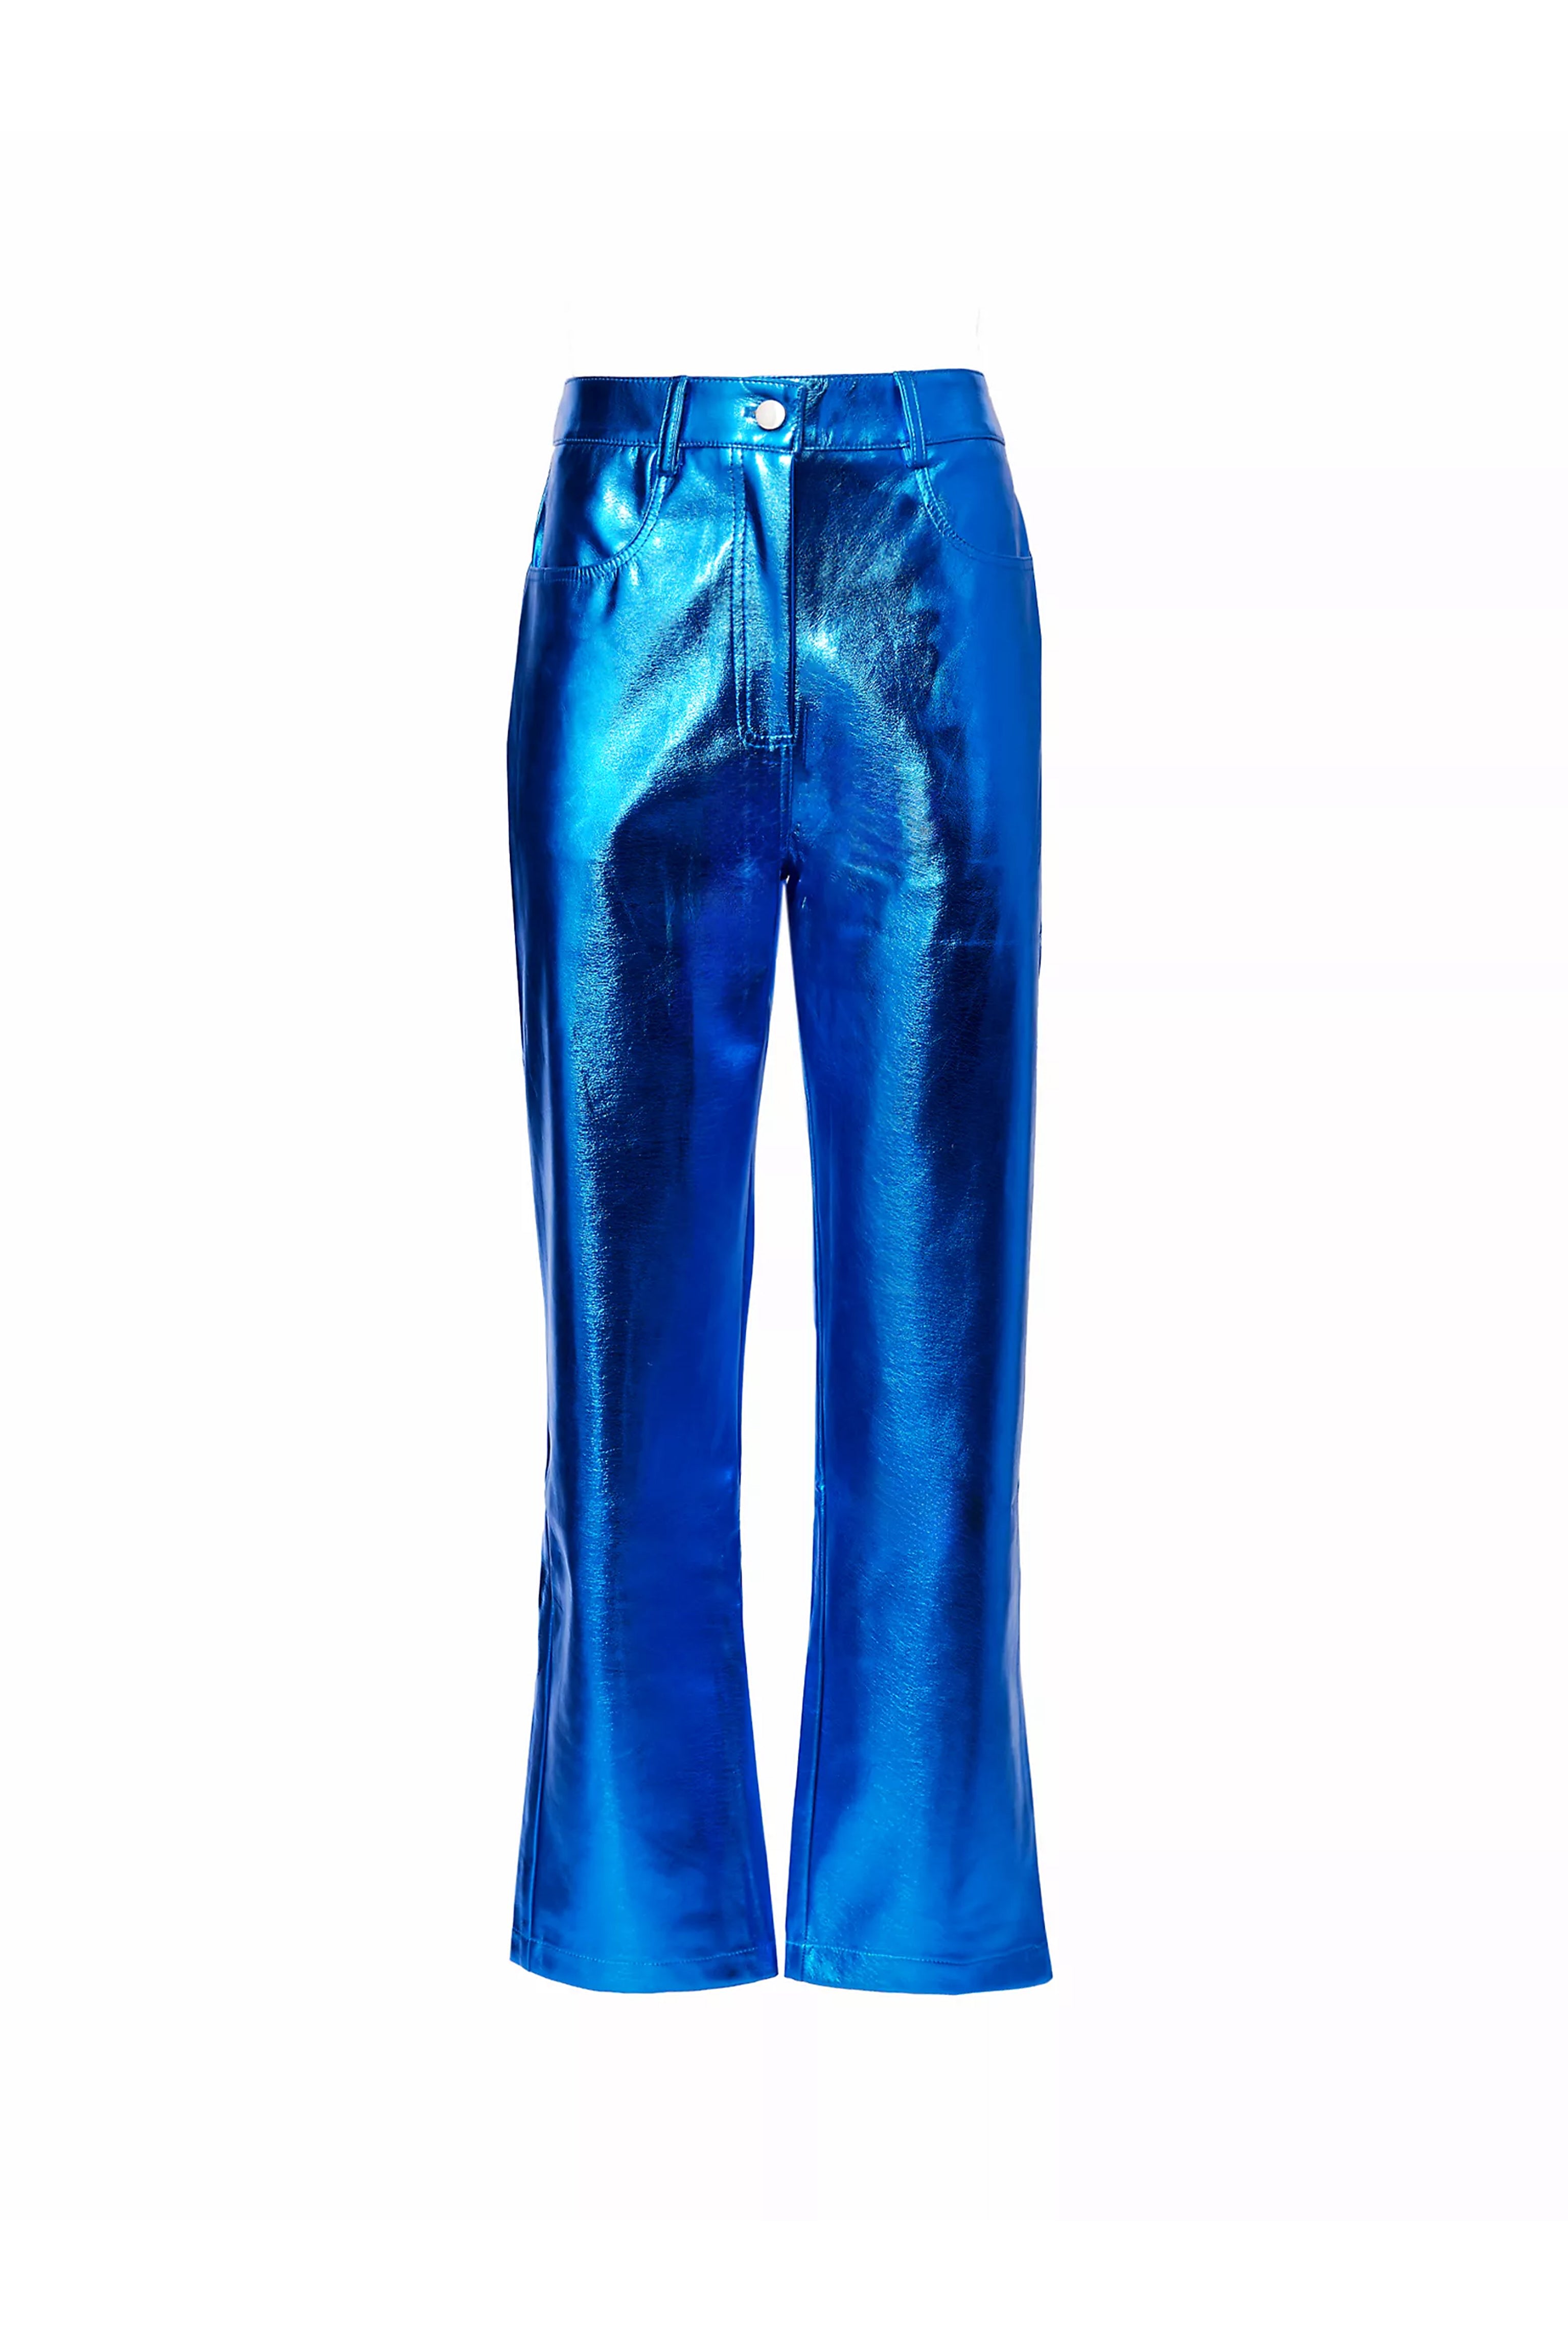 Amy Lynn Women's Lupe Cobalt Blue Leather Metallic Trousers